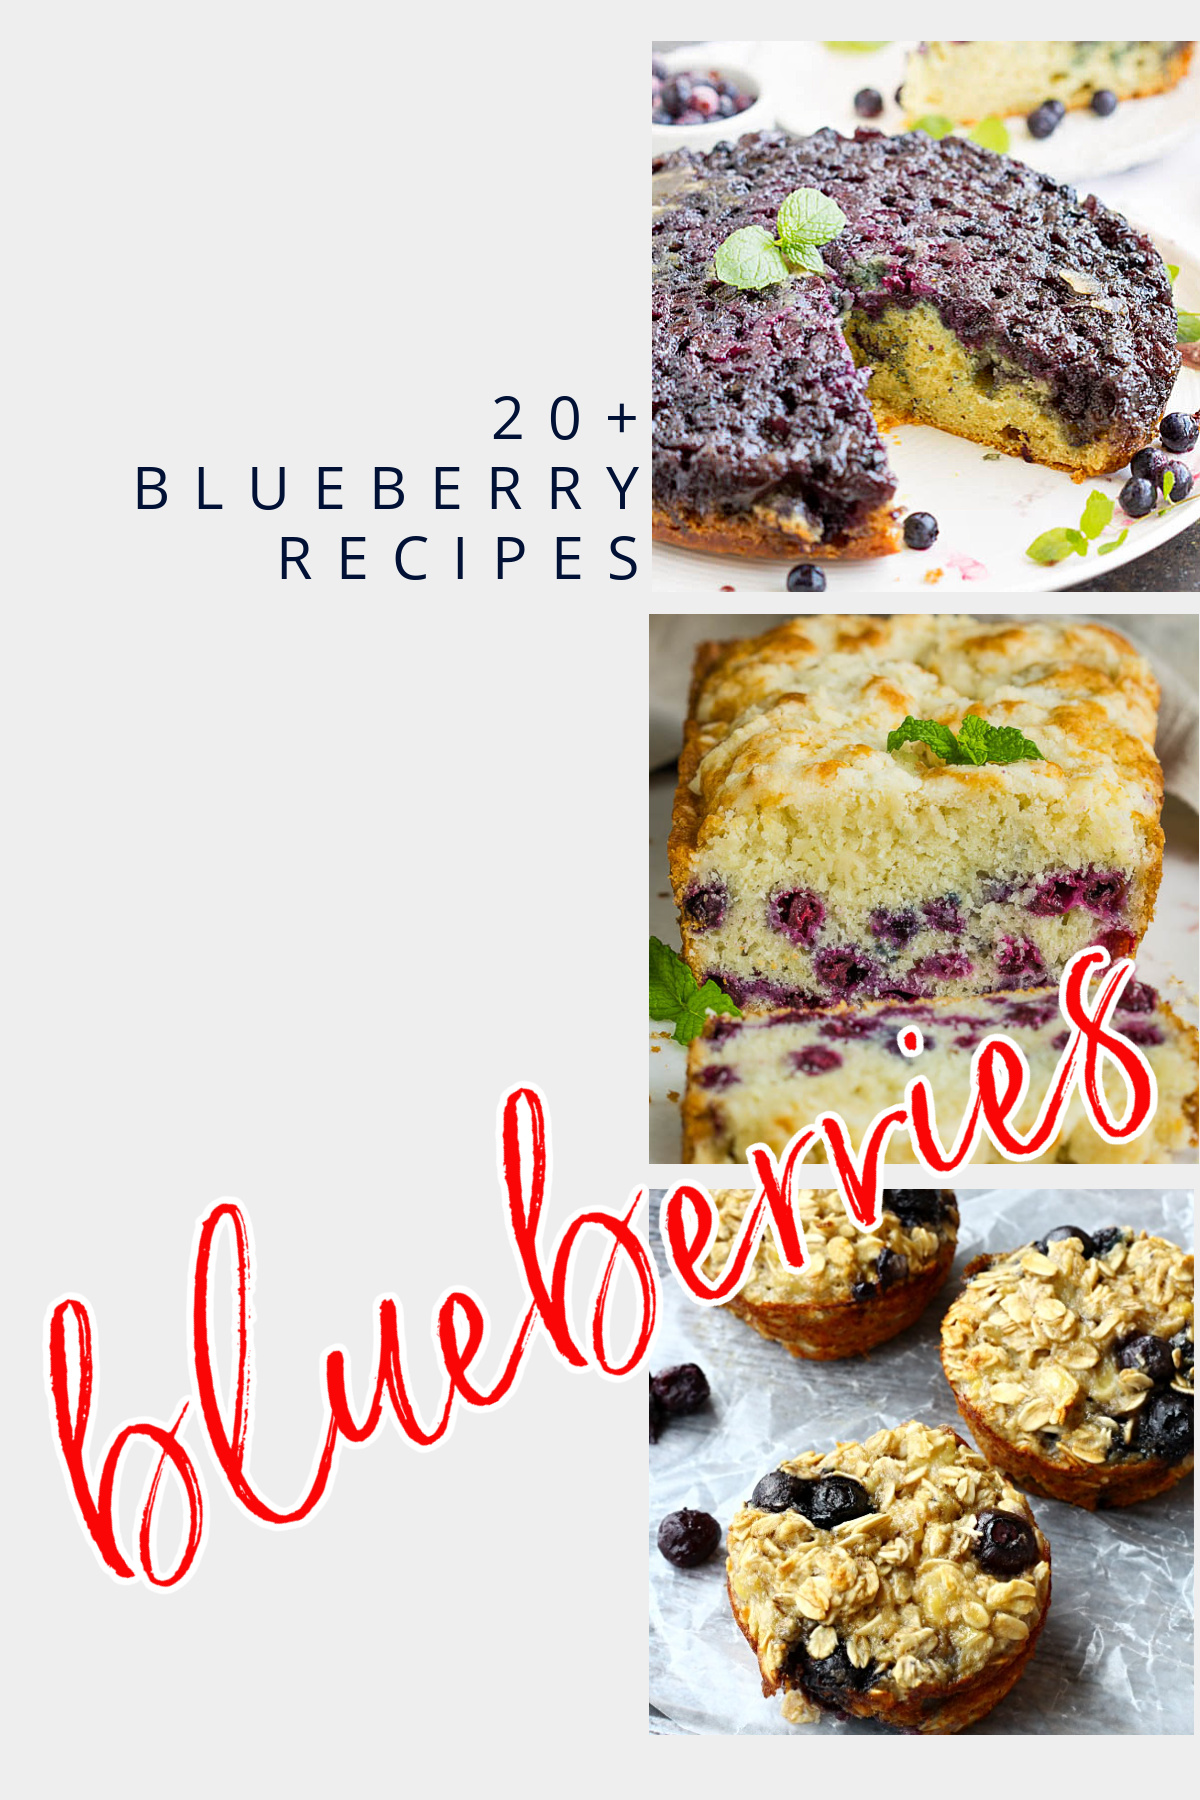 19 Scrumptious Blueberry Recipes